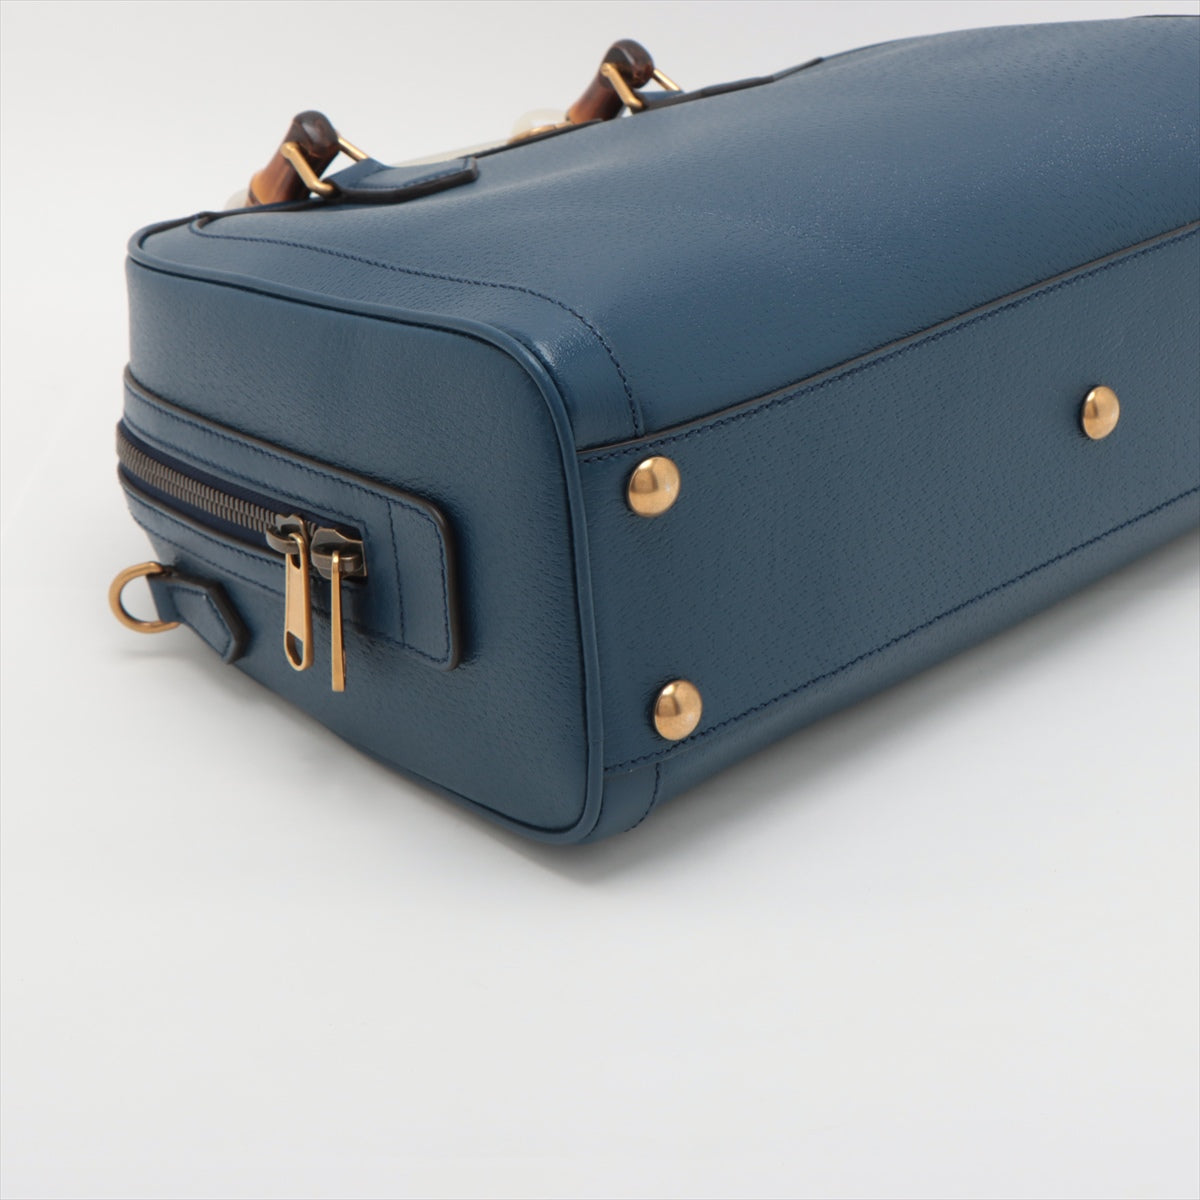 Gucci Diana Medium Duffel Leather 2 Way Handbag Blue 705373